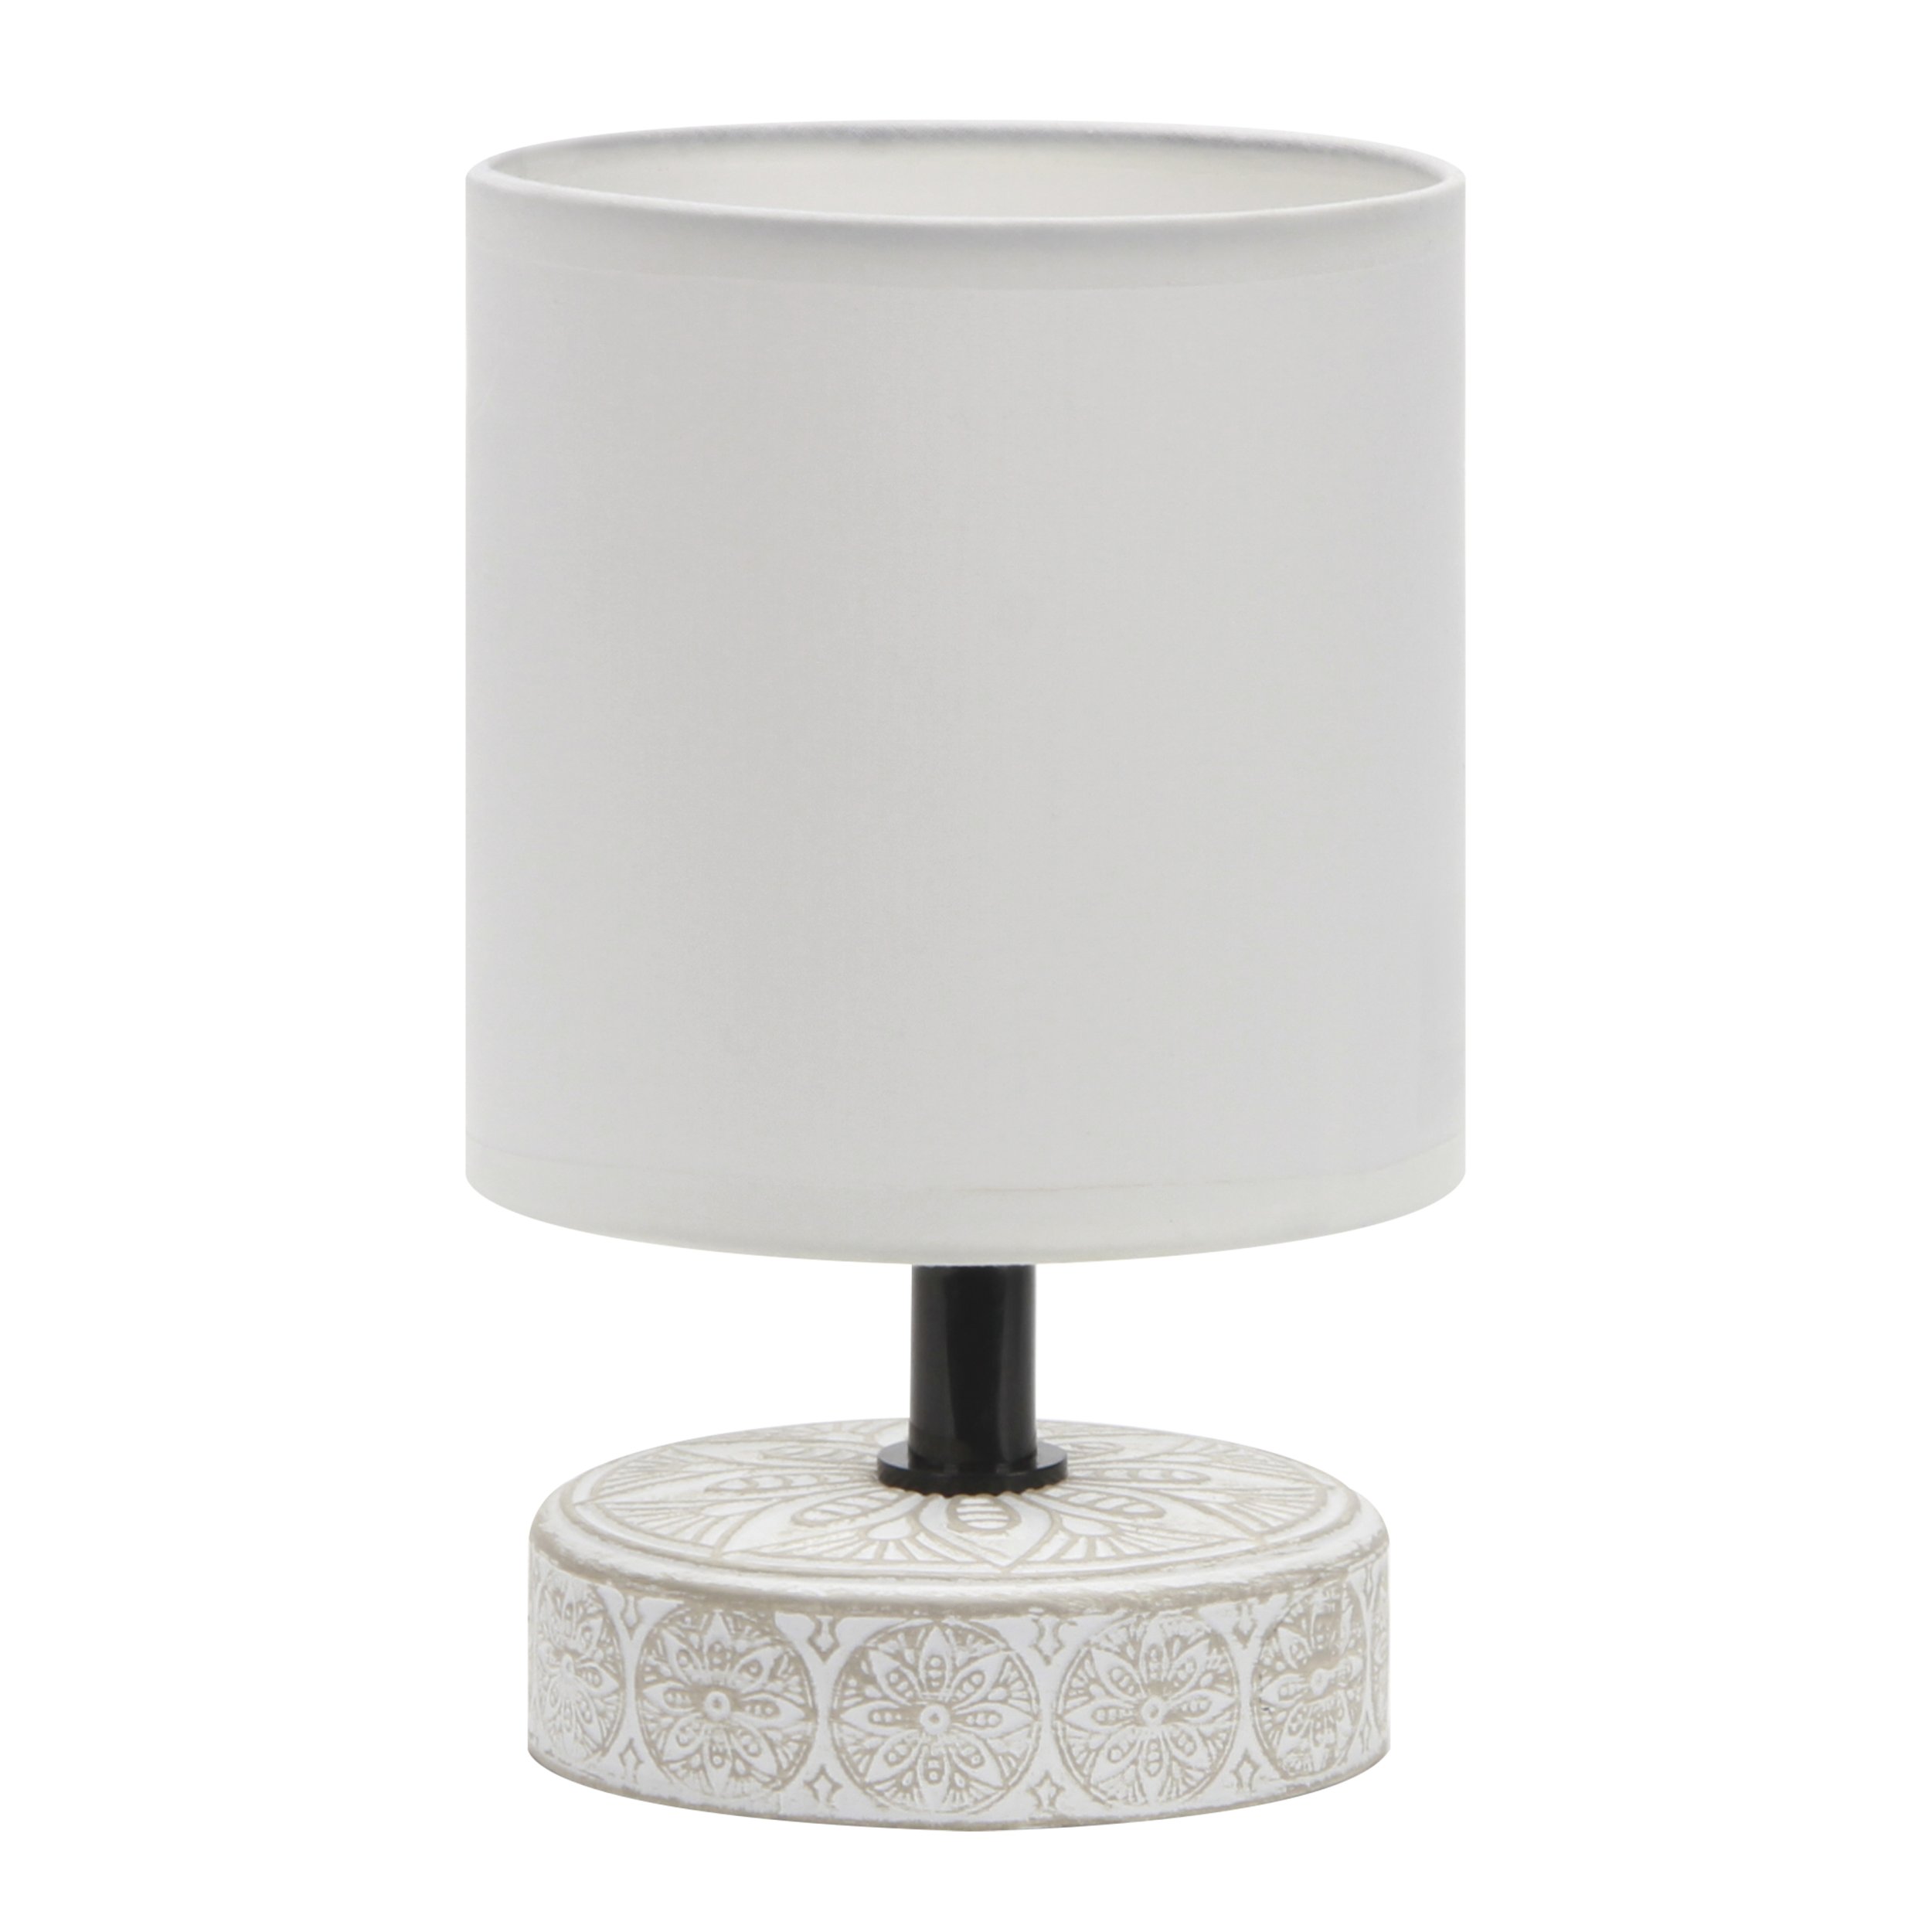 Декоративная настольная лампа Rivoli ELEANOR 7070-501, цвет белый 7070-501 Б0057269 - фото 1